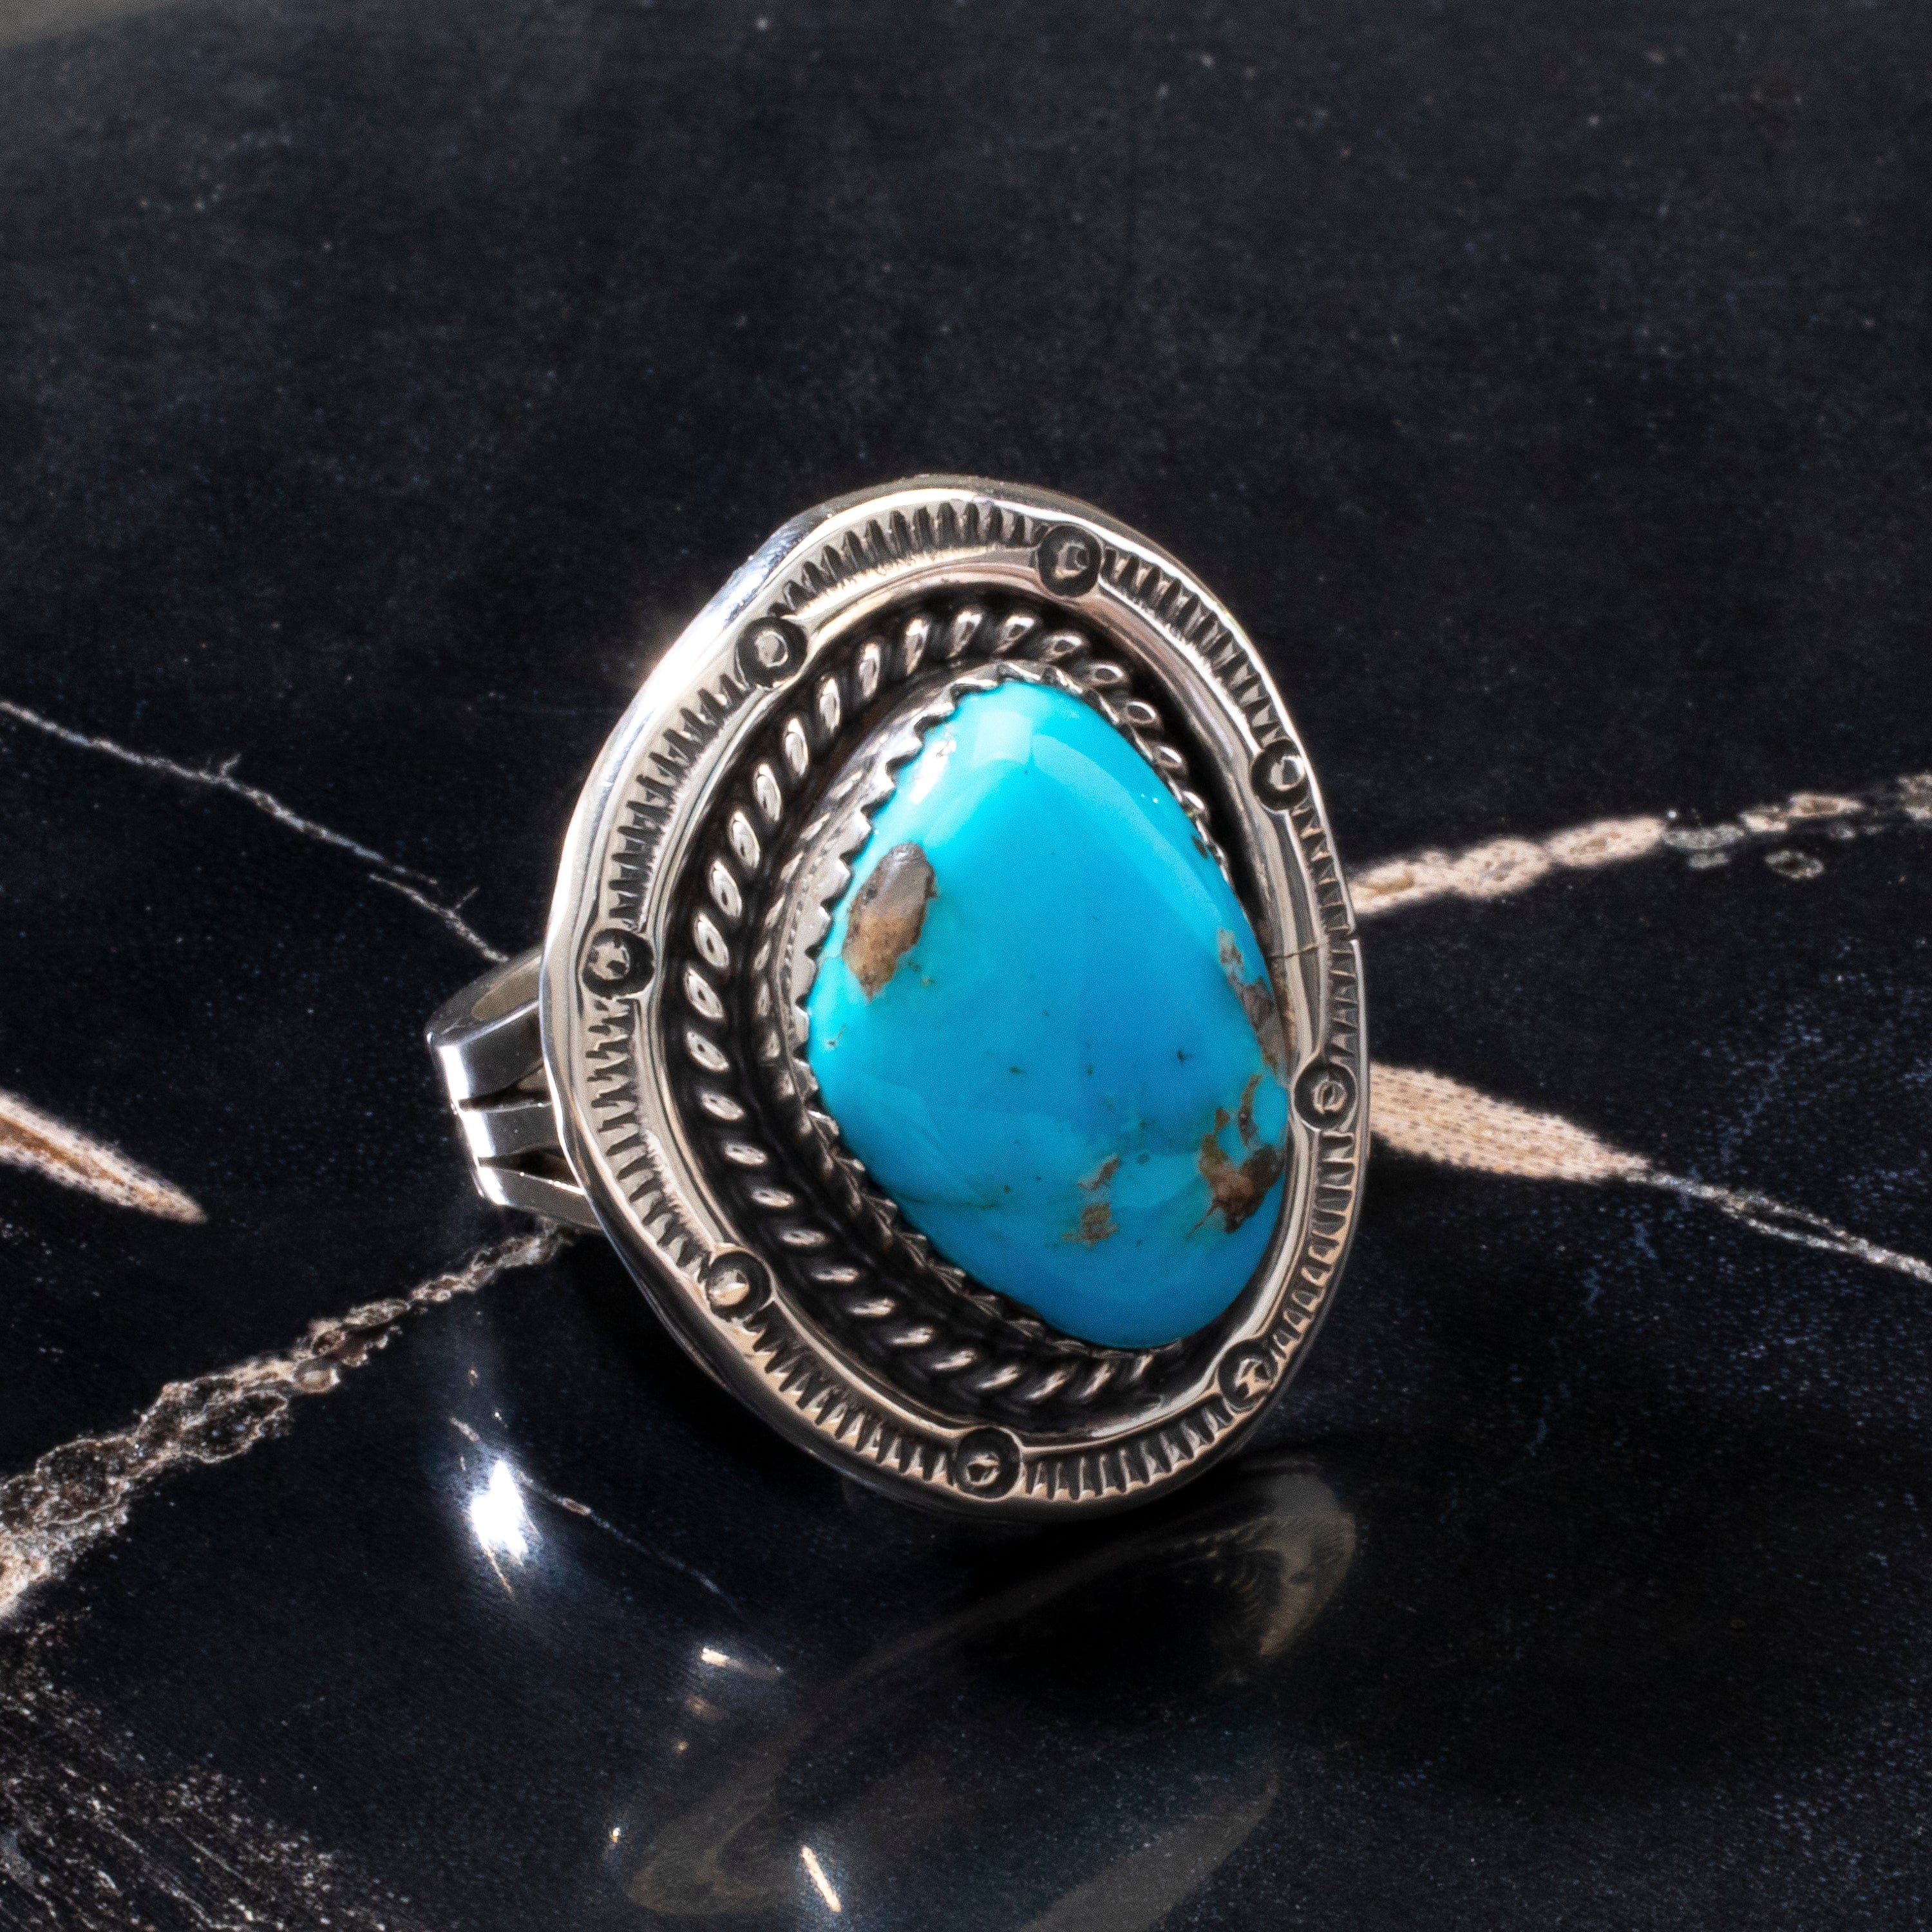 Kalifano Native American Jewelry 6 Joe Piaso Jr. Sleeping Beauty Turquoise Navajo USA Native American Made 925 Sterling Silver Ring NAR700.035.6